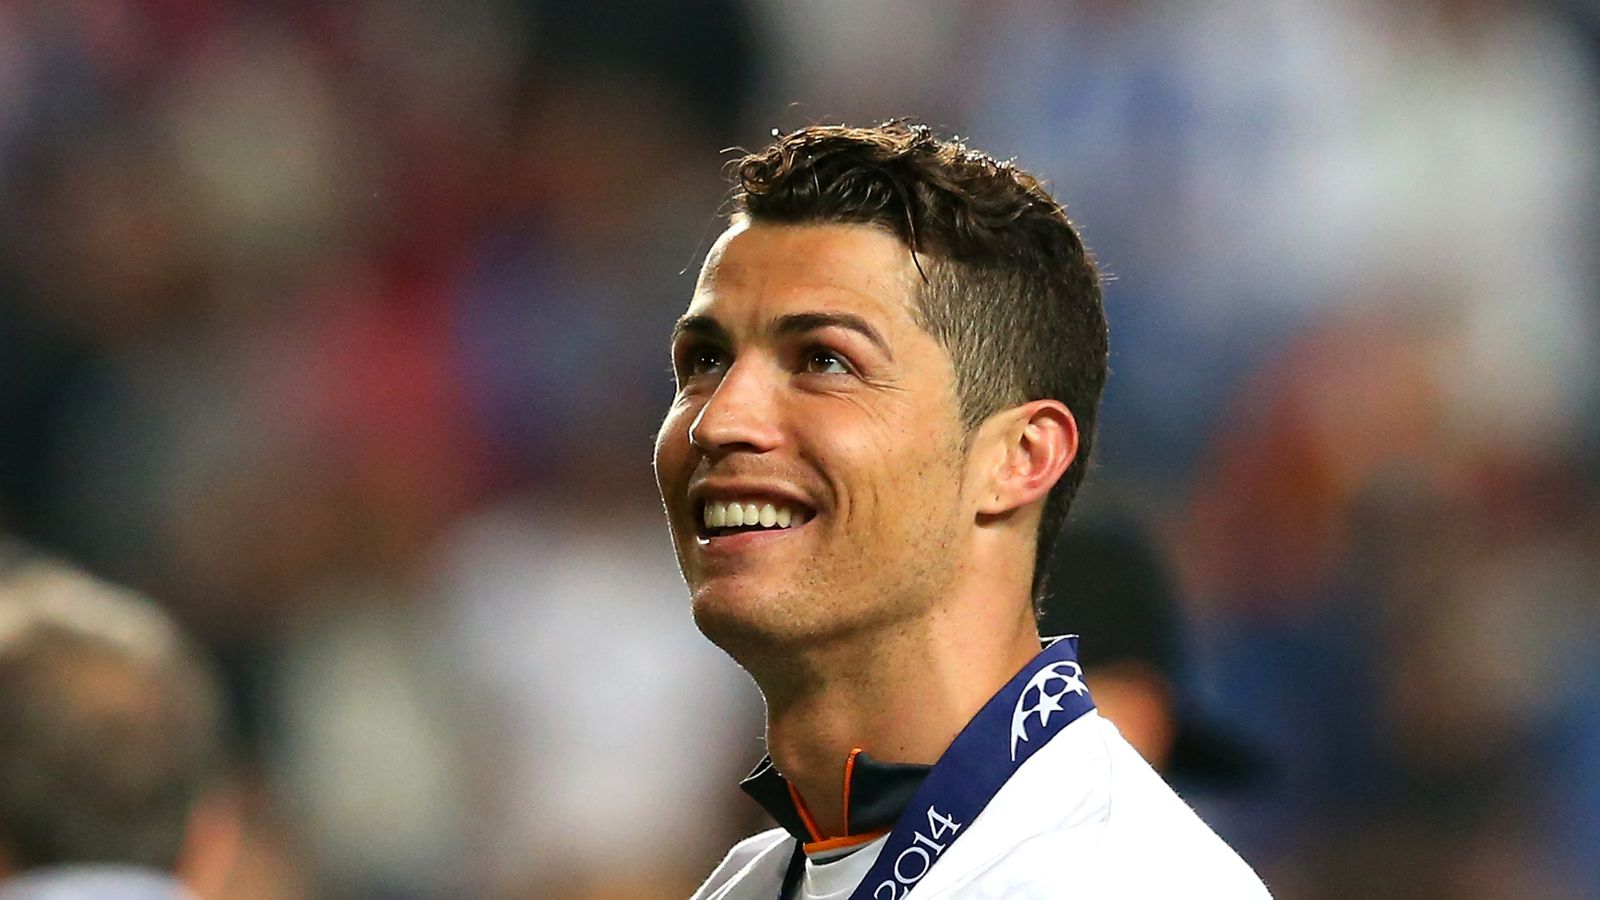 Cristiano Ronaldo joining Real Madrid for 2014 International Champions